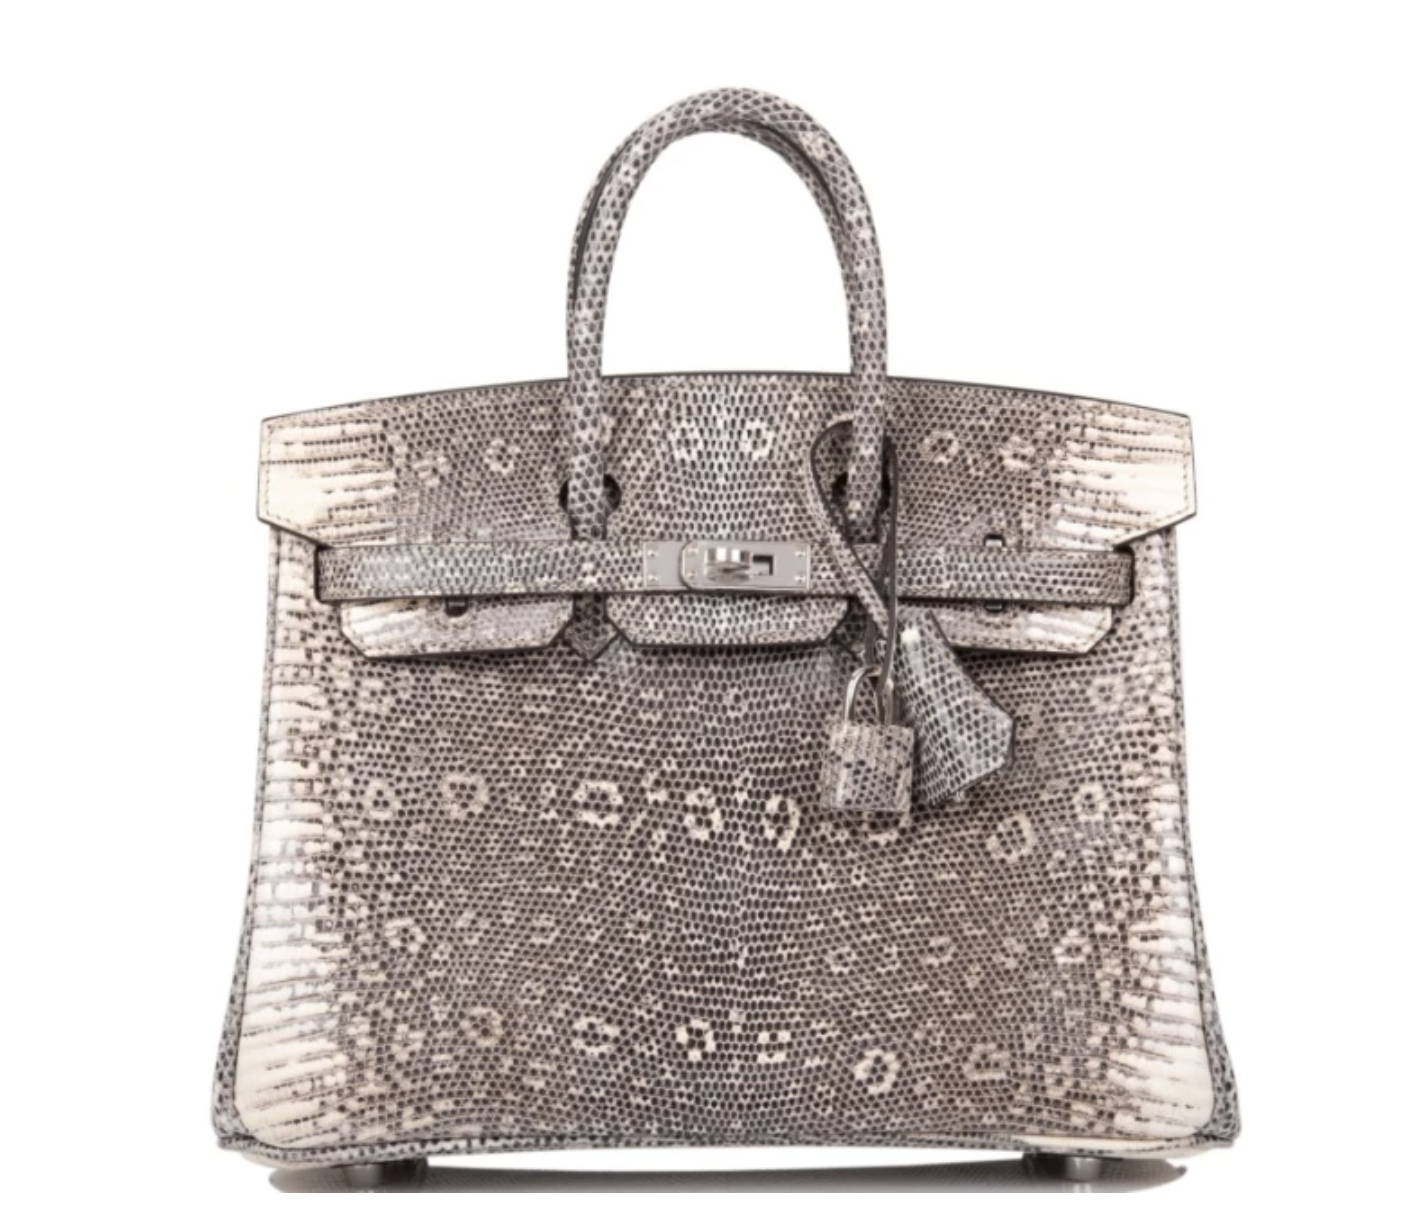 HERMES Birkin 25 swift handbag mint silver metal fittings U stamp